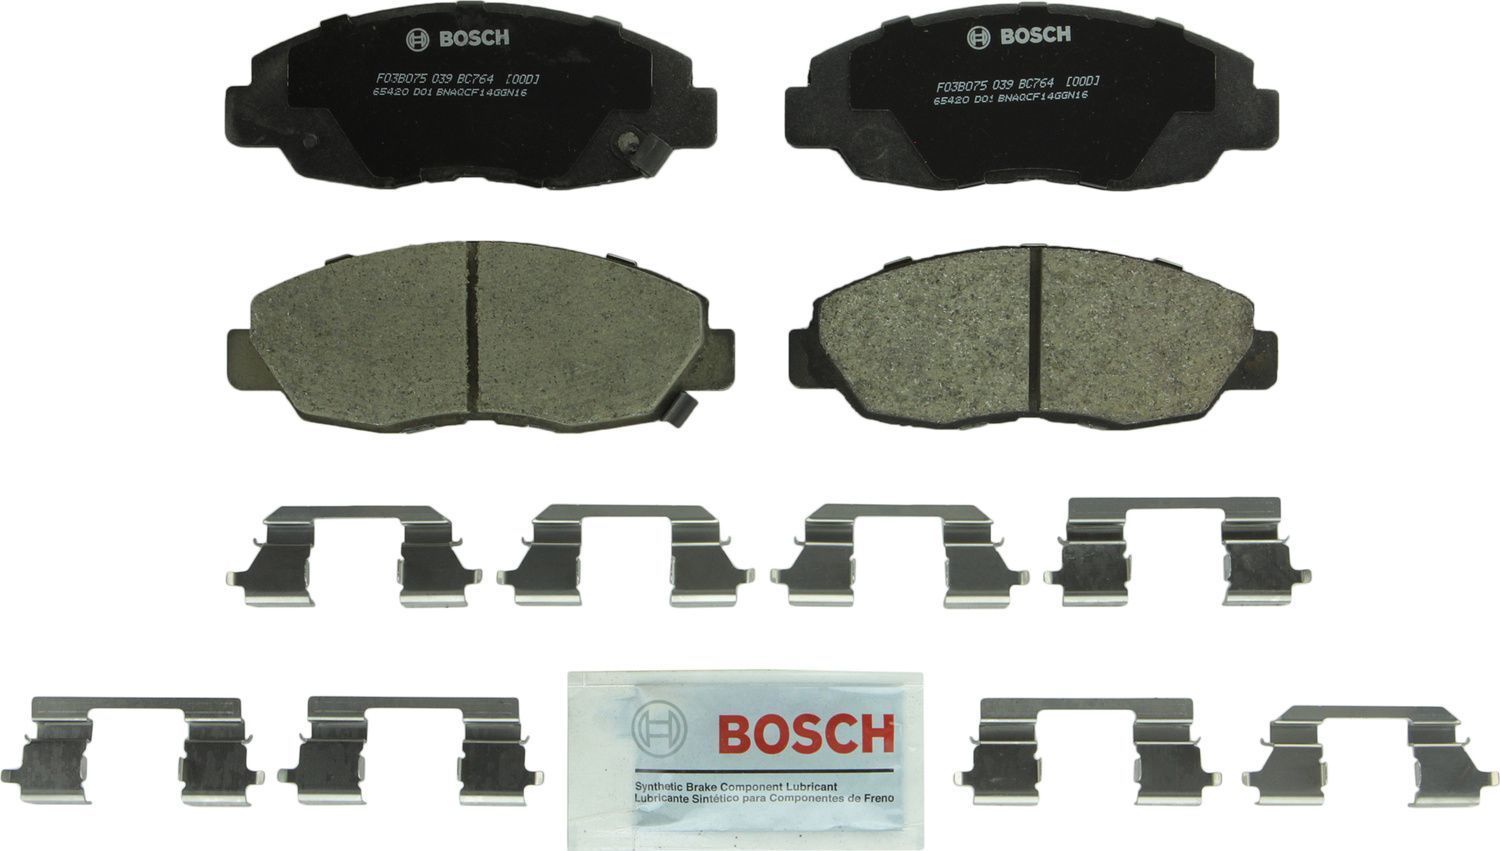 BOSCH BRAKE - Bosch QuietCast Brake Pad Ceramic Brake Pads (Front) - BQC BC764